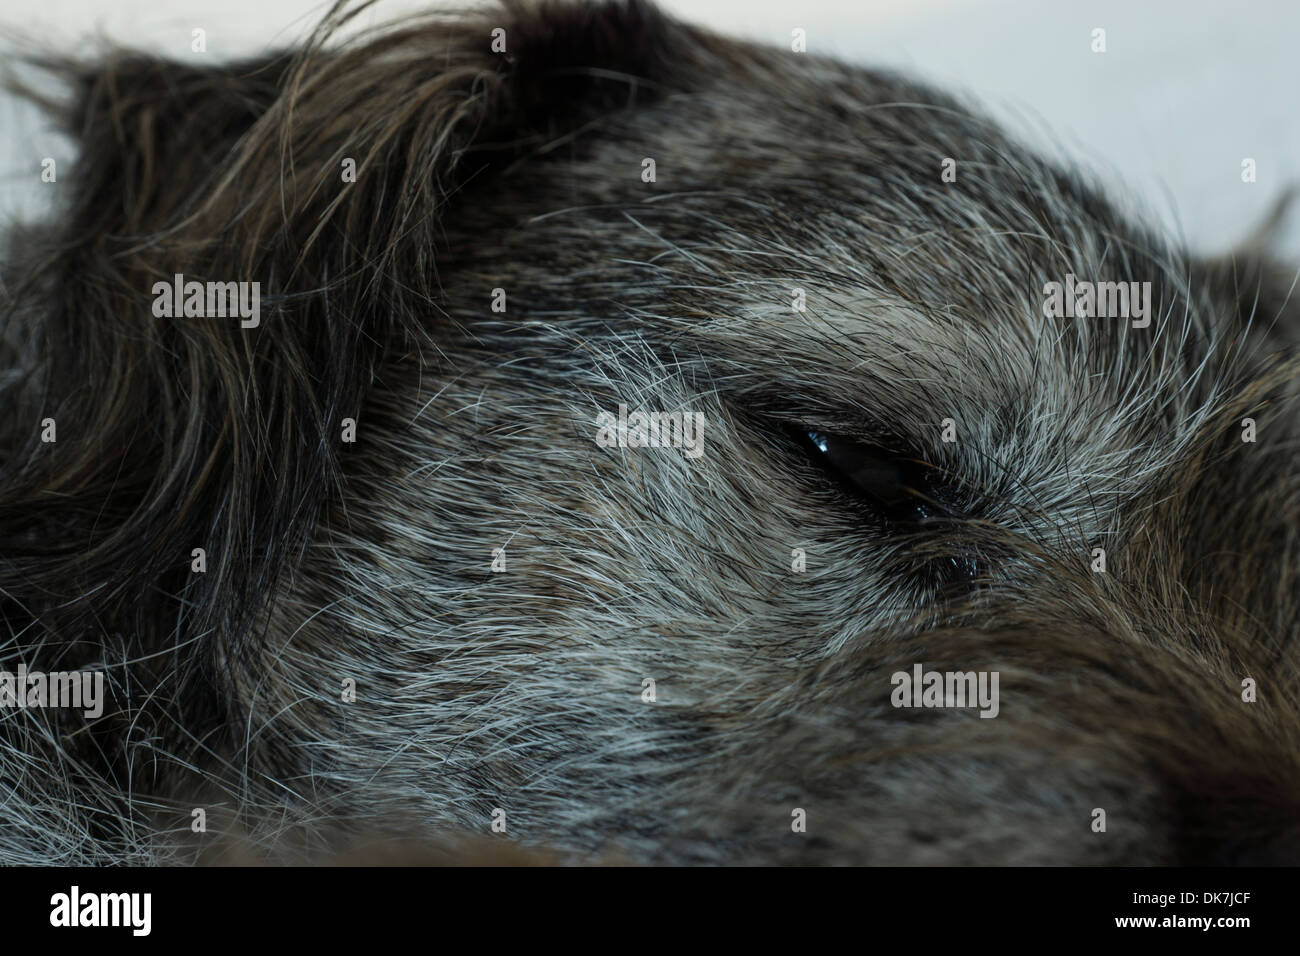 borer terrier dog face nose long hair bed resting Stock Photo